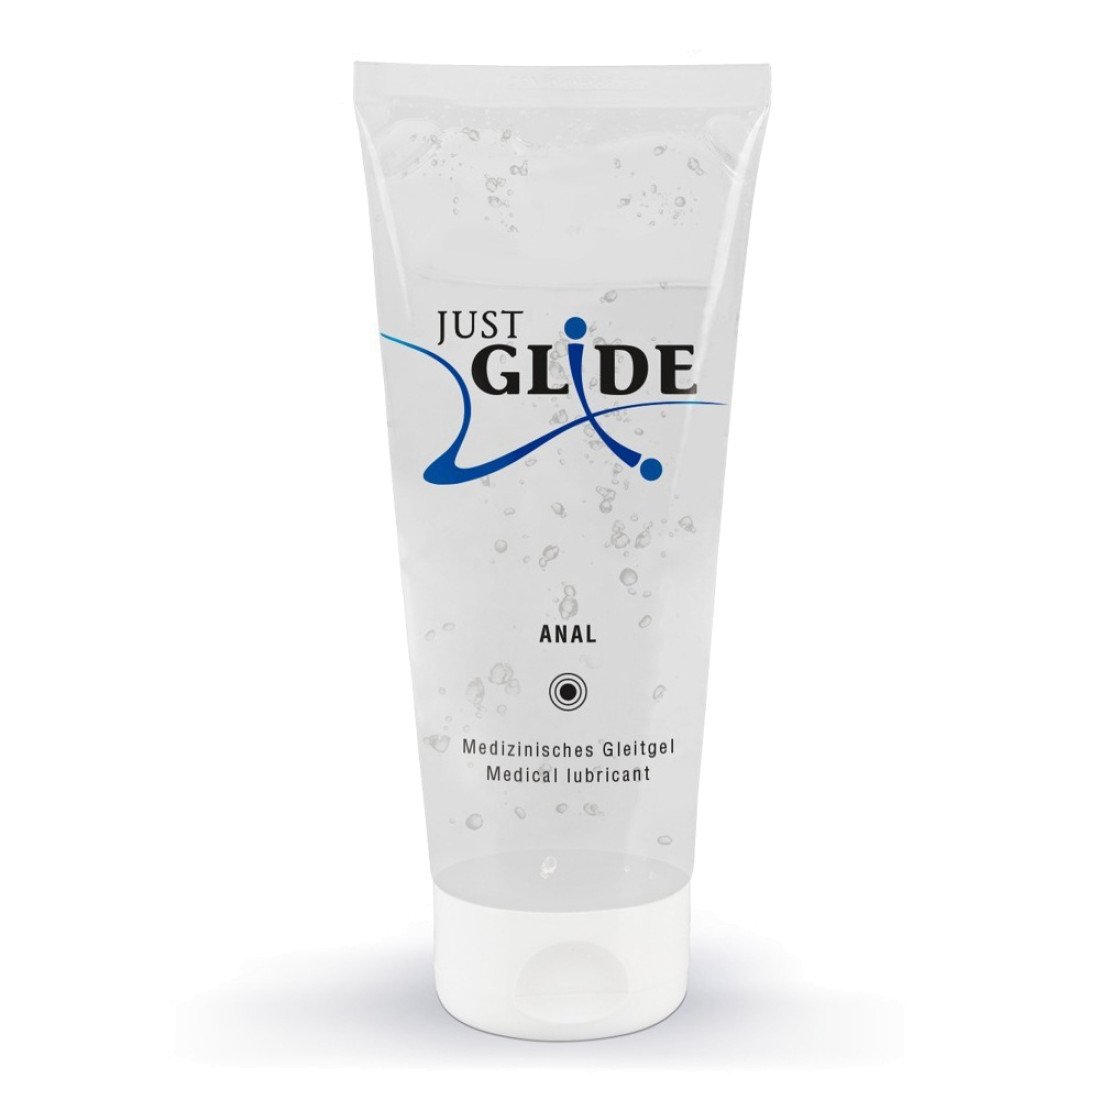 Analinis vandens pagrindo lubrikantas „Just Glide“, 200 ml - Just Glide